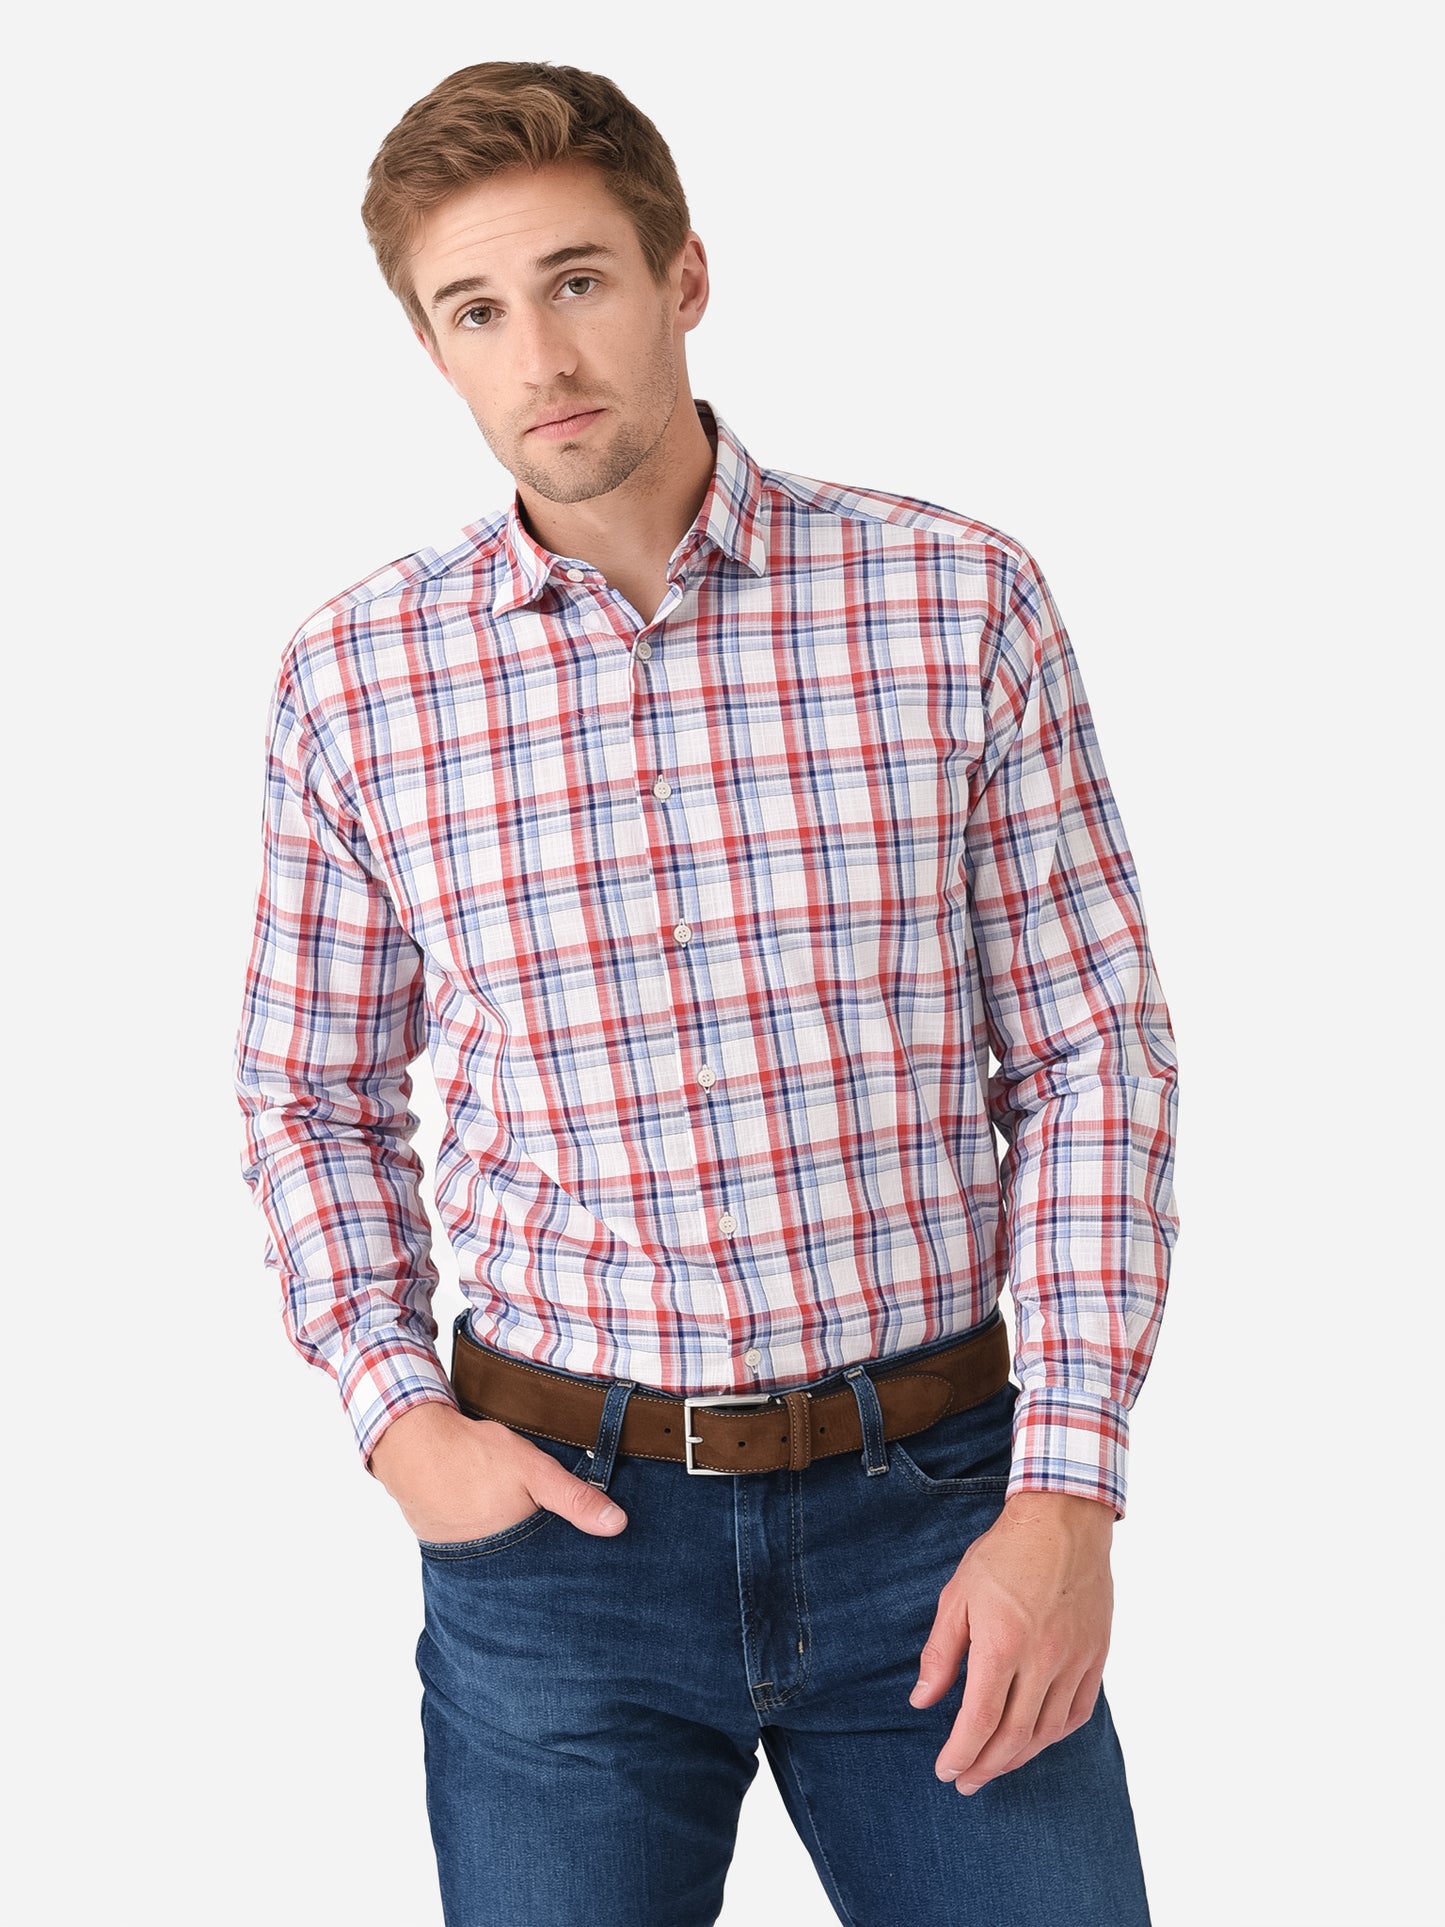 Miller Westby Men's St. Croix Button-Down Shirt